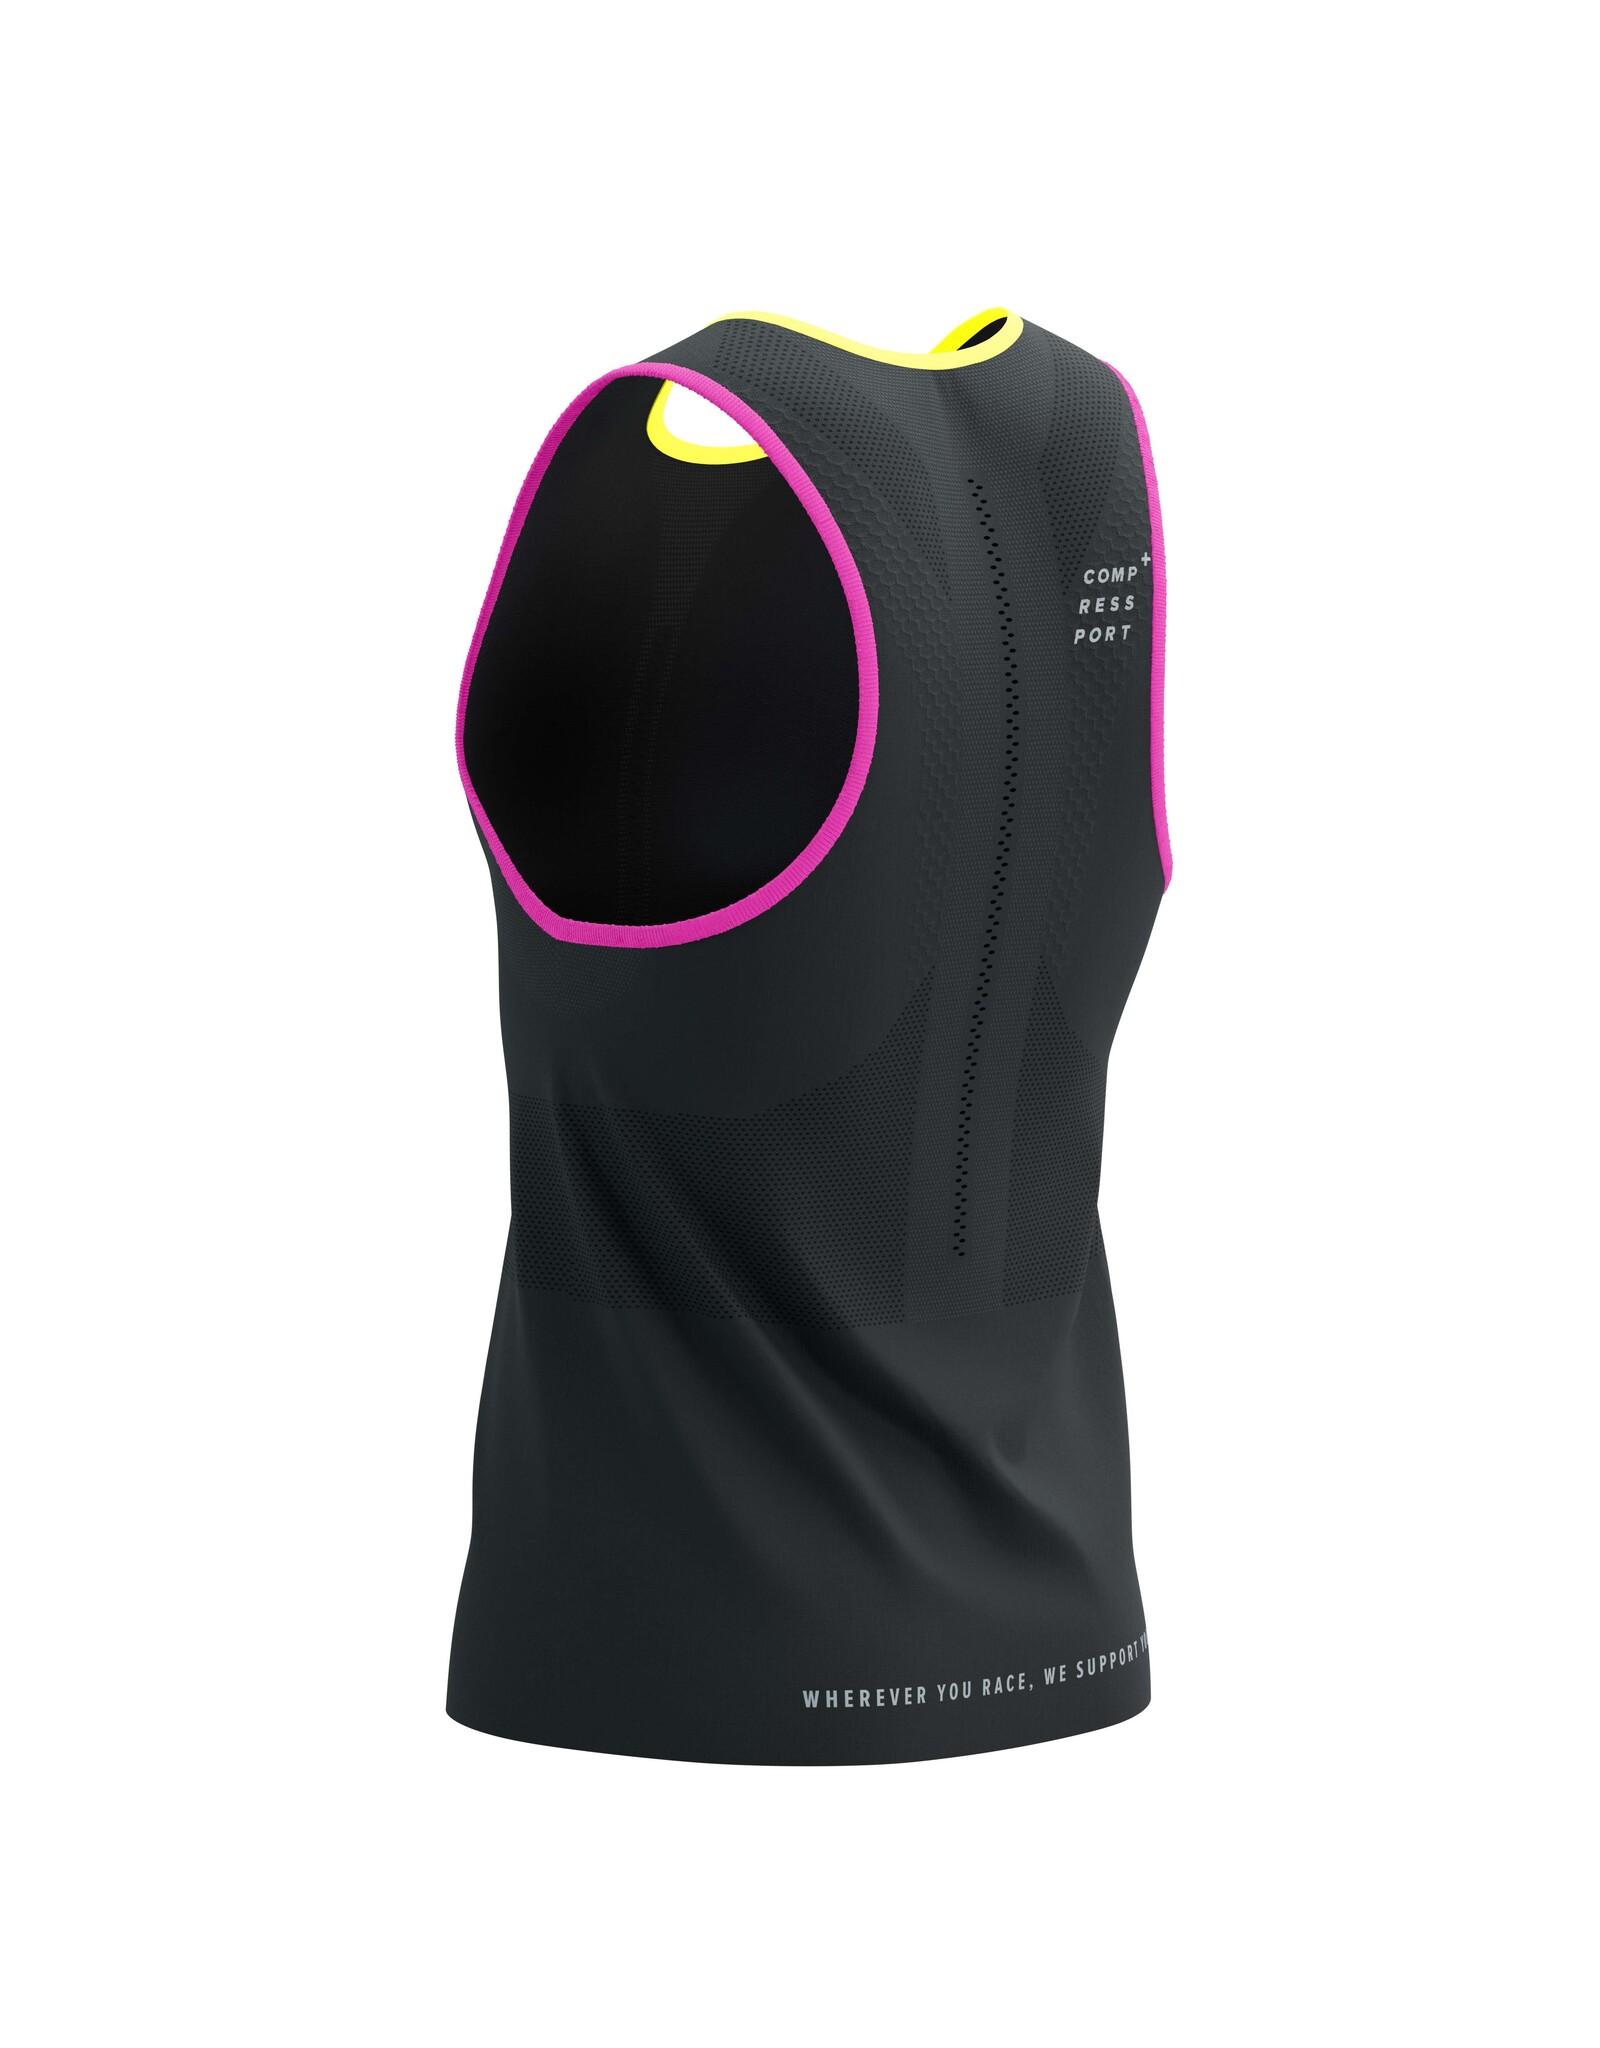 Compressport Pro Racing Singlet M - Black/Safety Yellow/Neon Pink